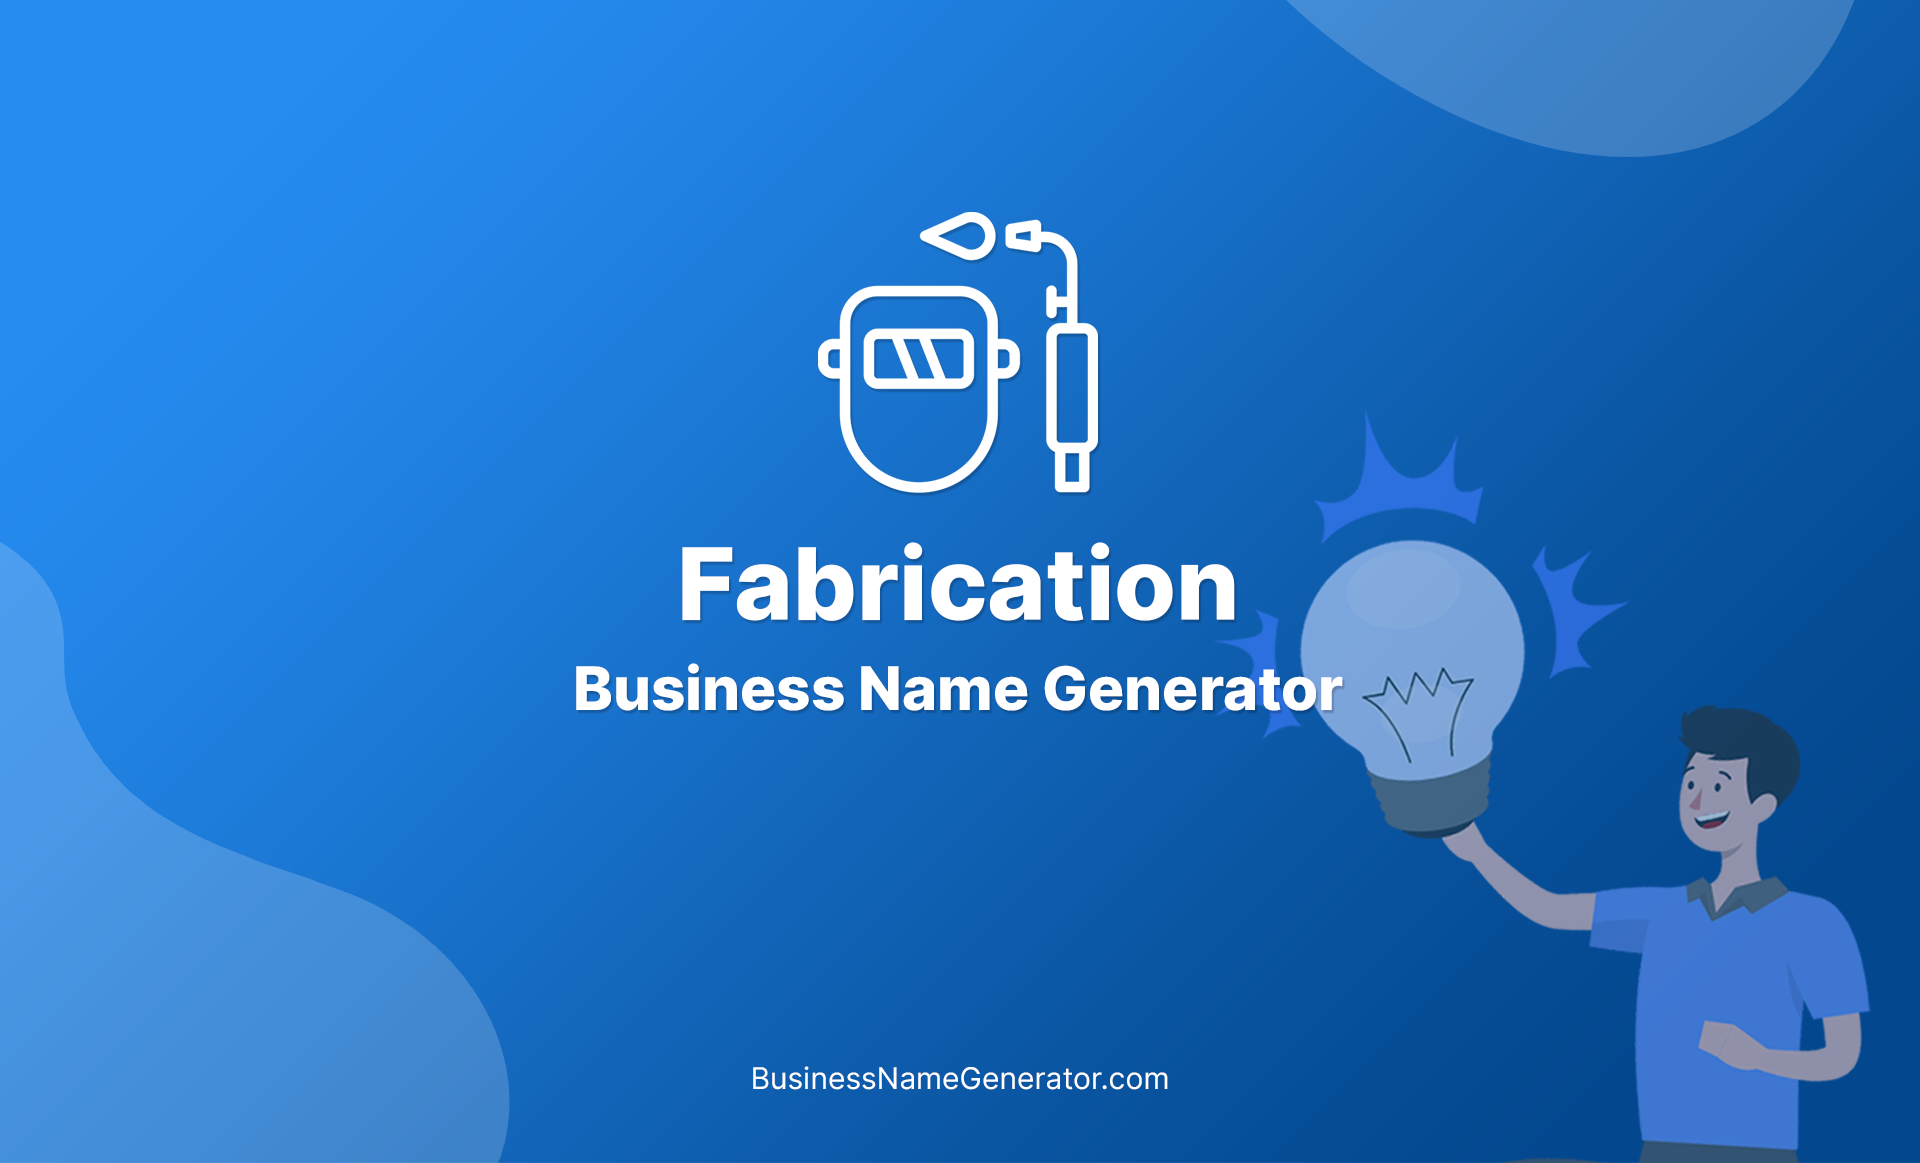 Fabrication Business Name Generator